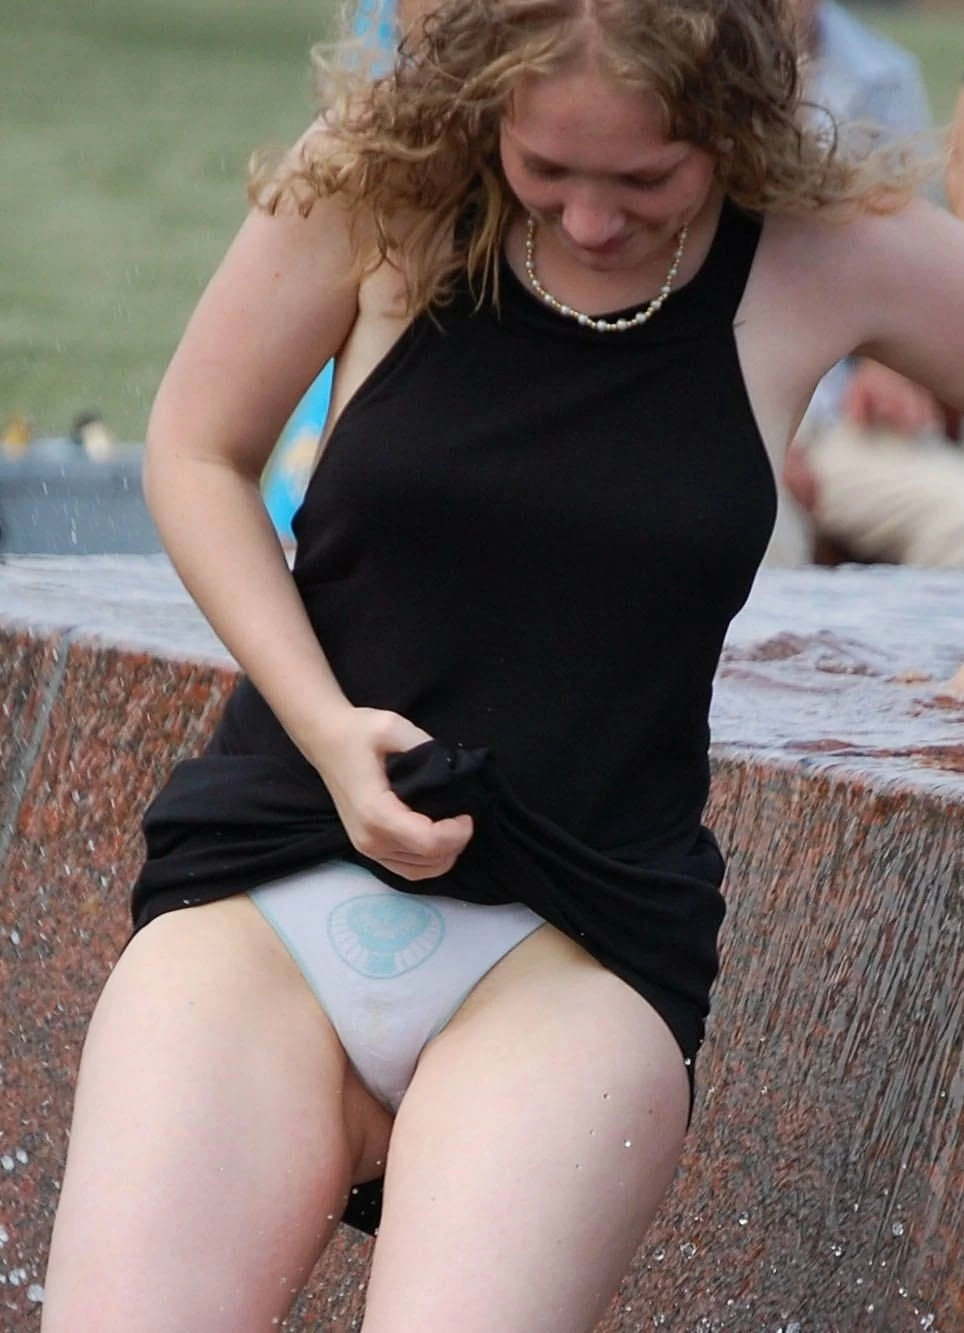 young blonde teen outdoor flashing underwear upskirt